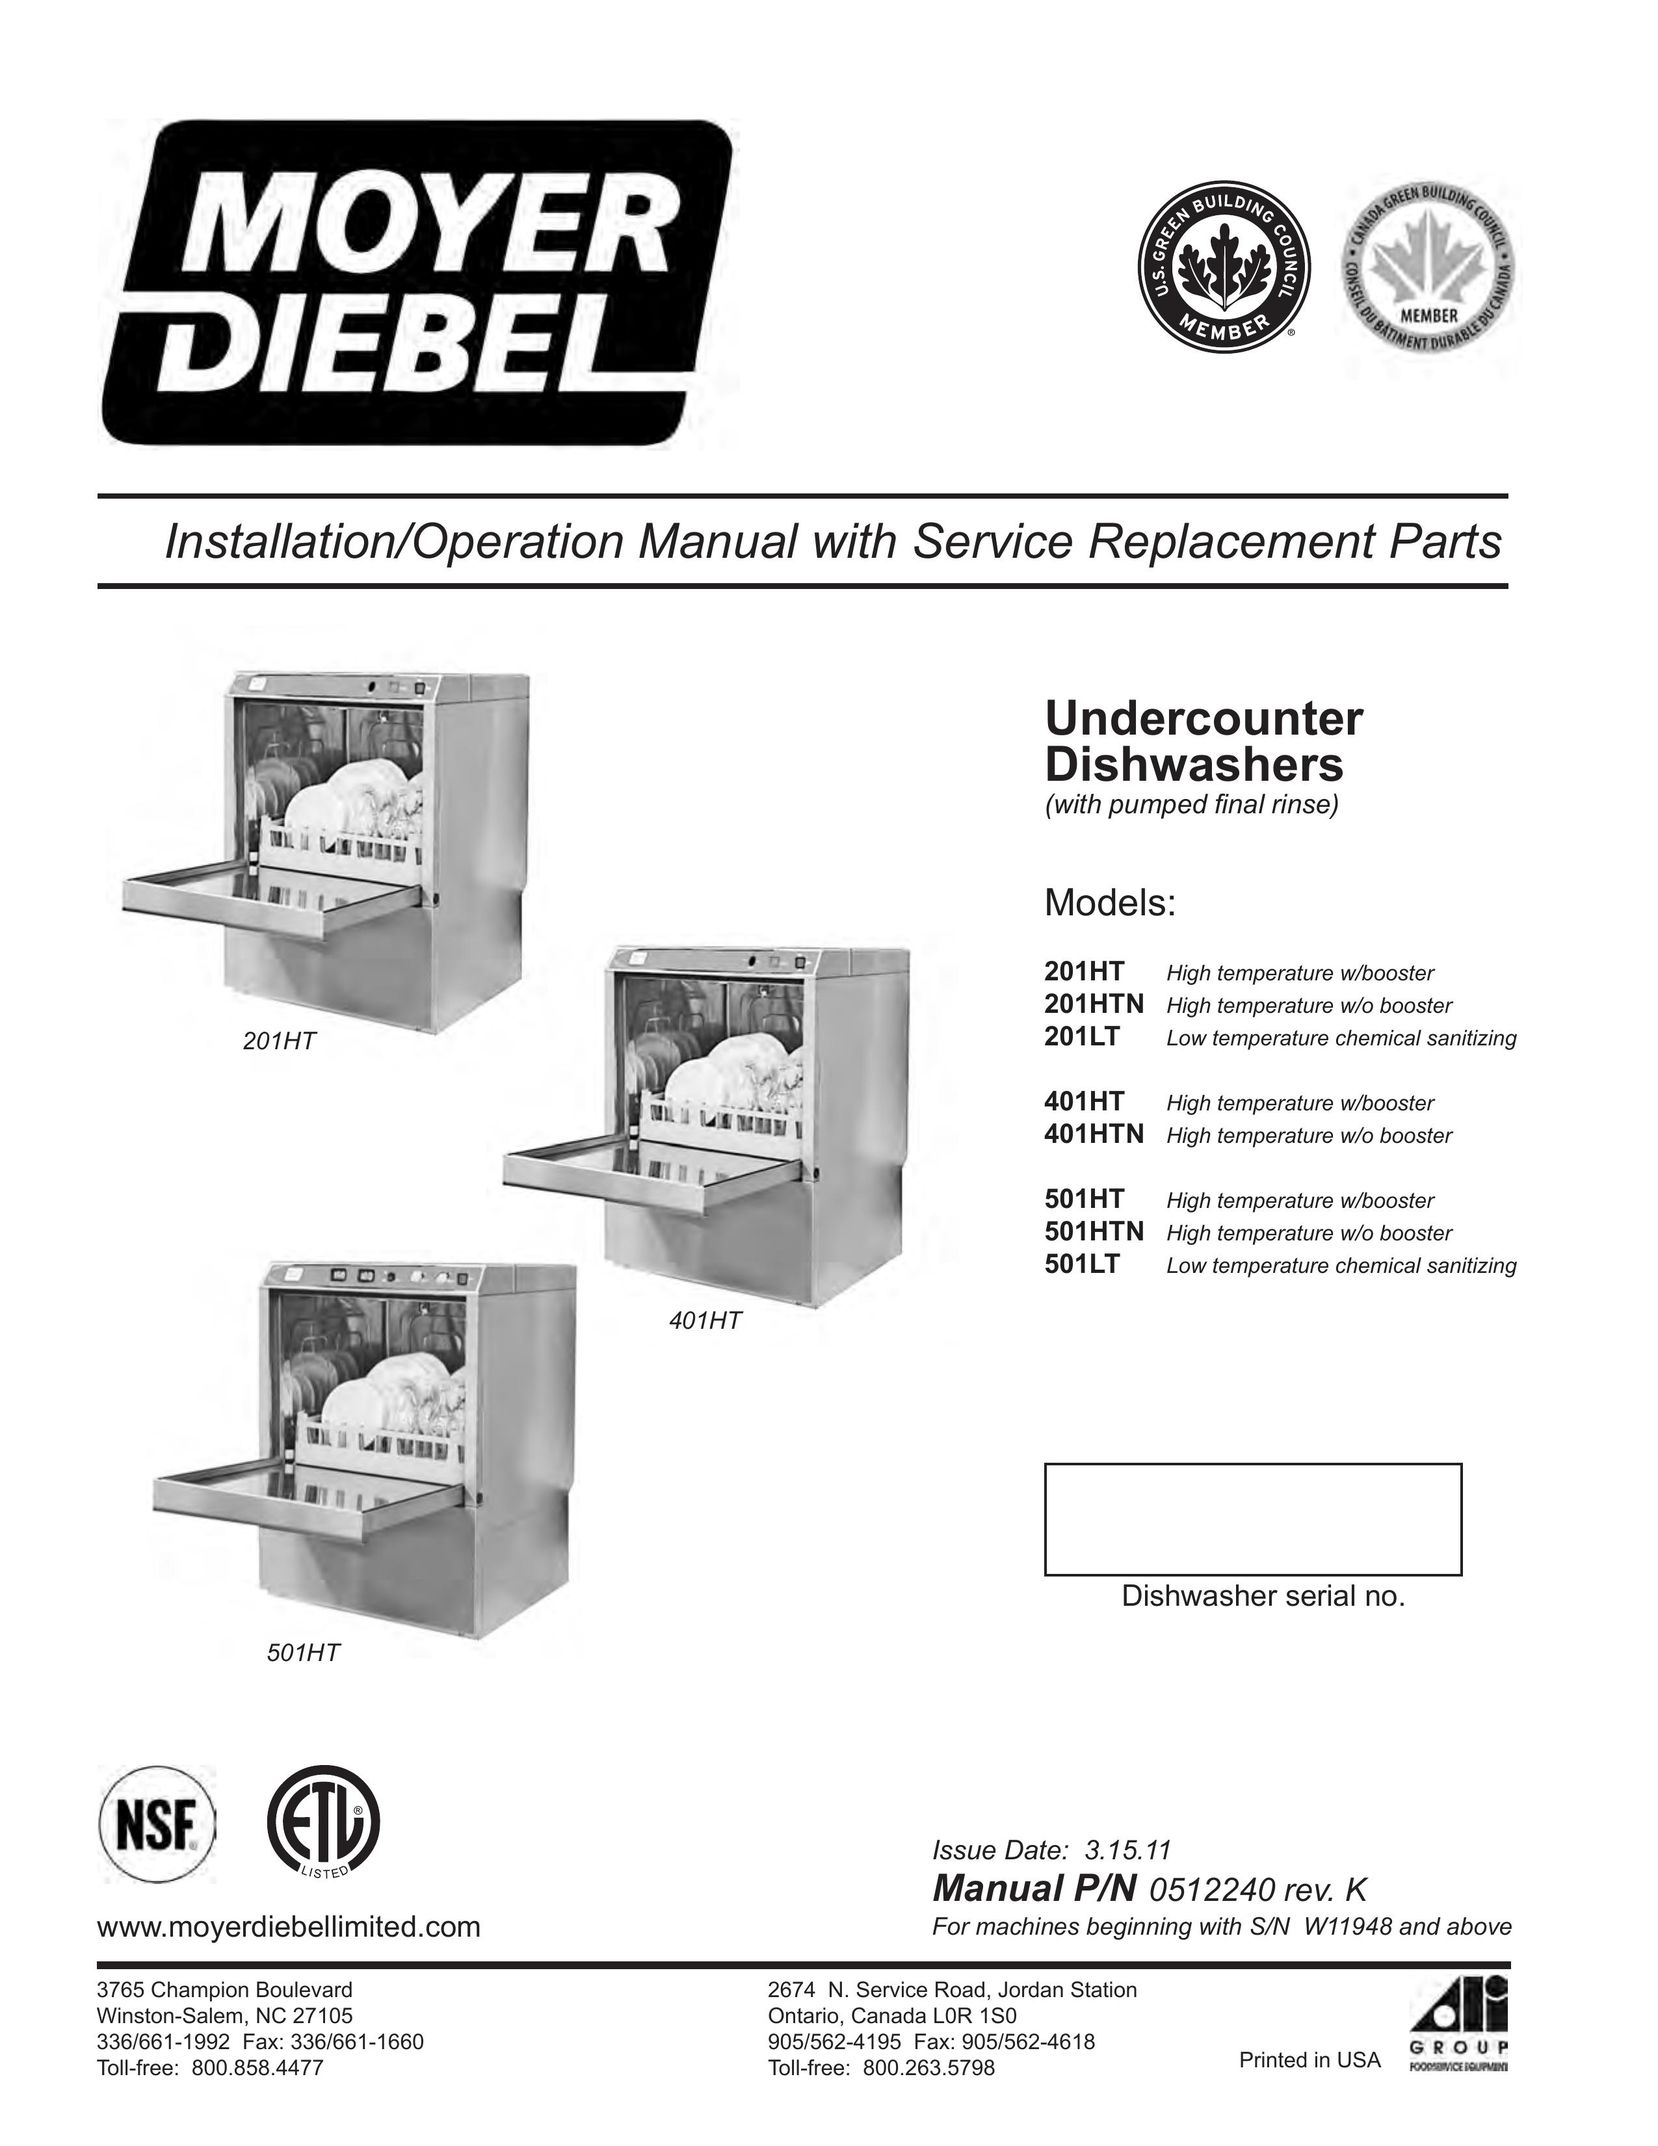 Moyer Diebel 501HT Dishwasher User Manual